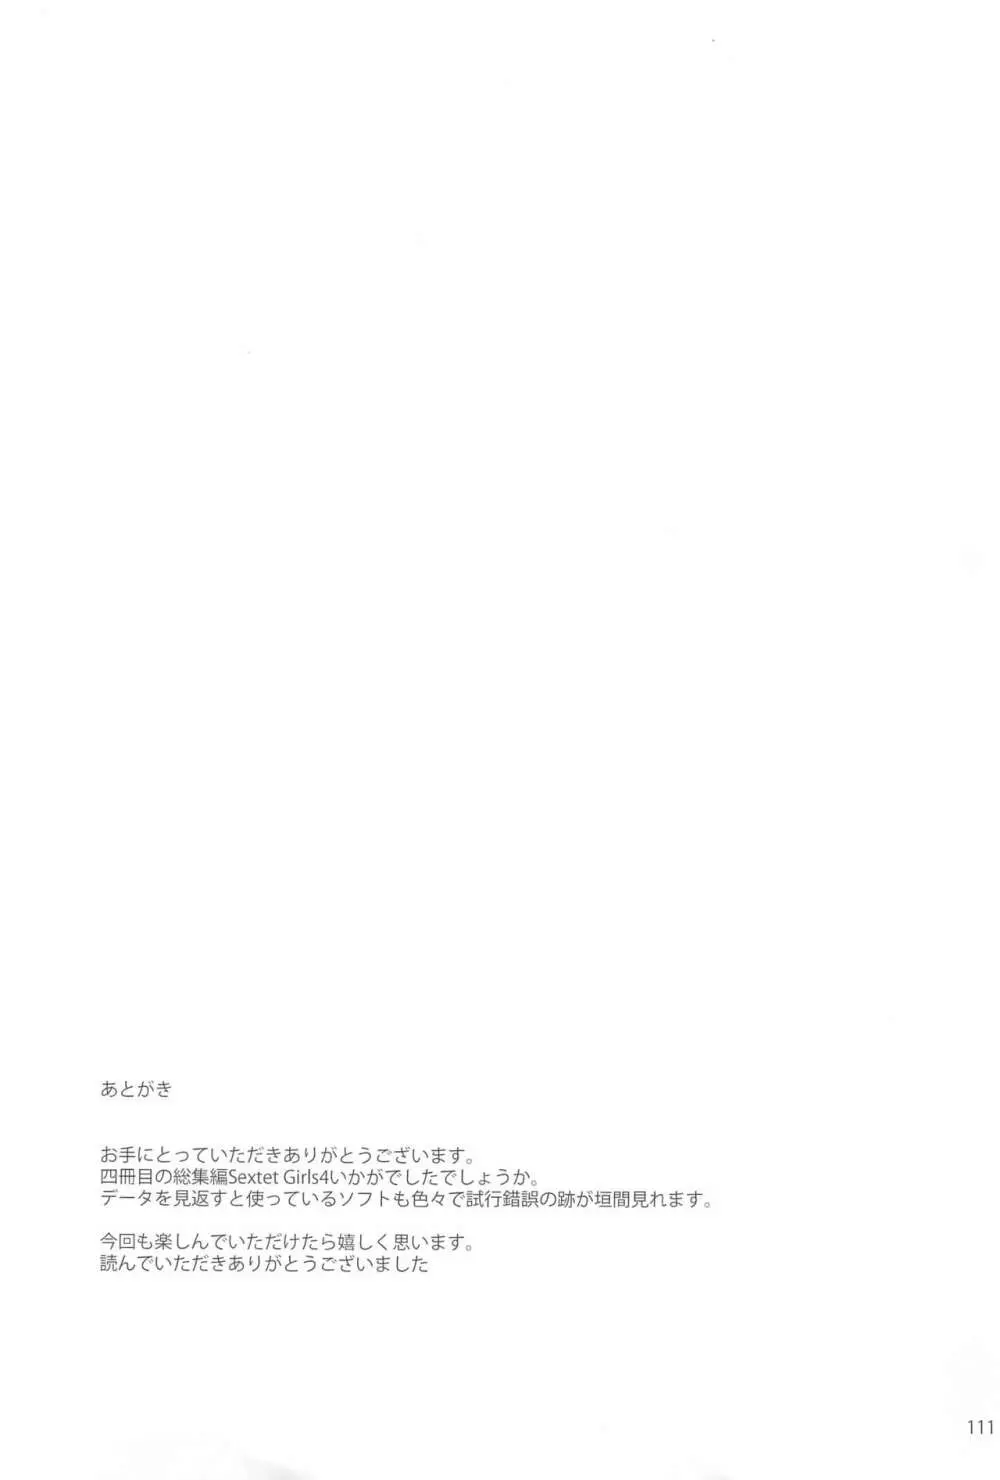 Sextet Girls 4 -スミヤ同人総集編- 112ページ